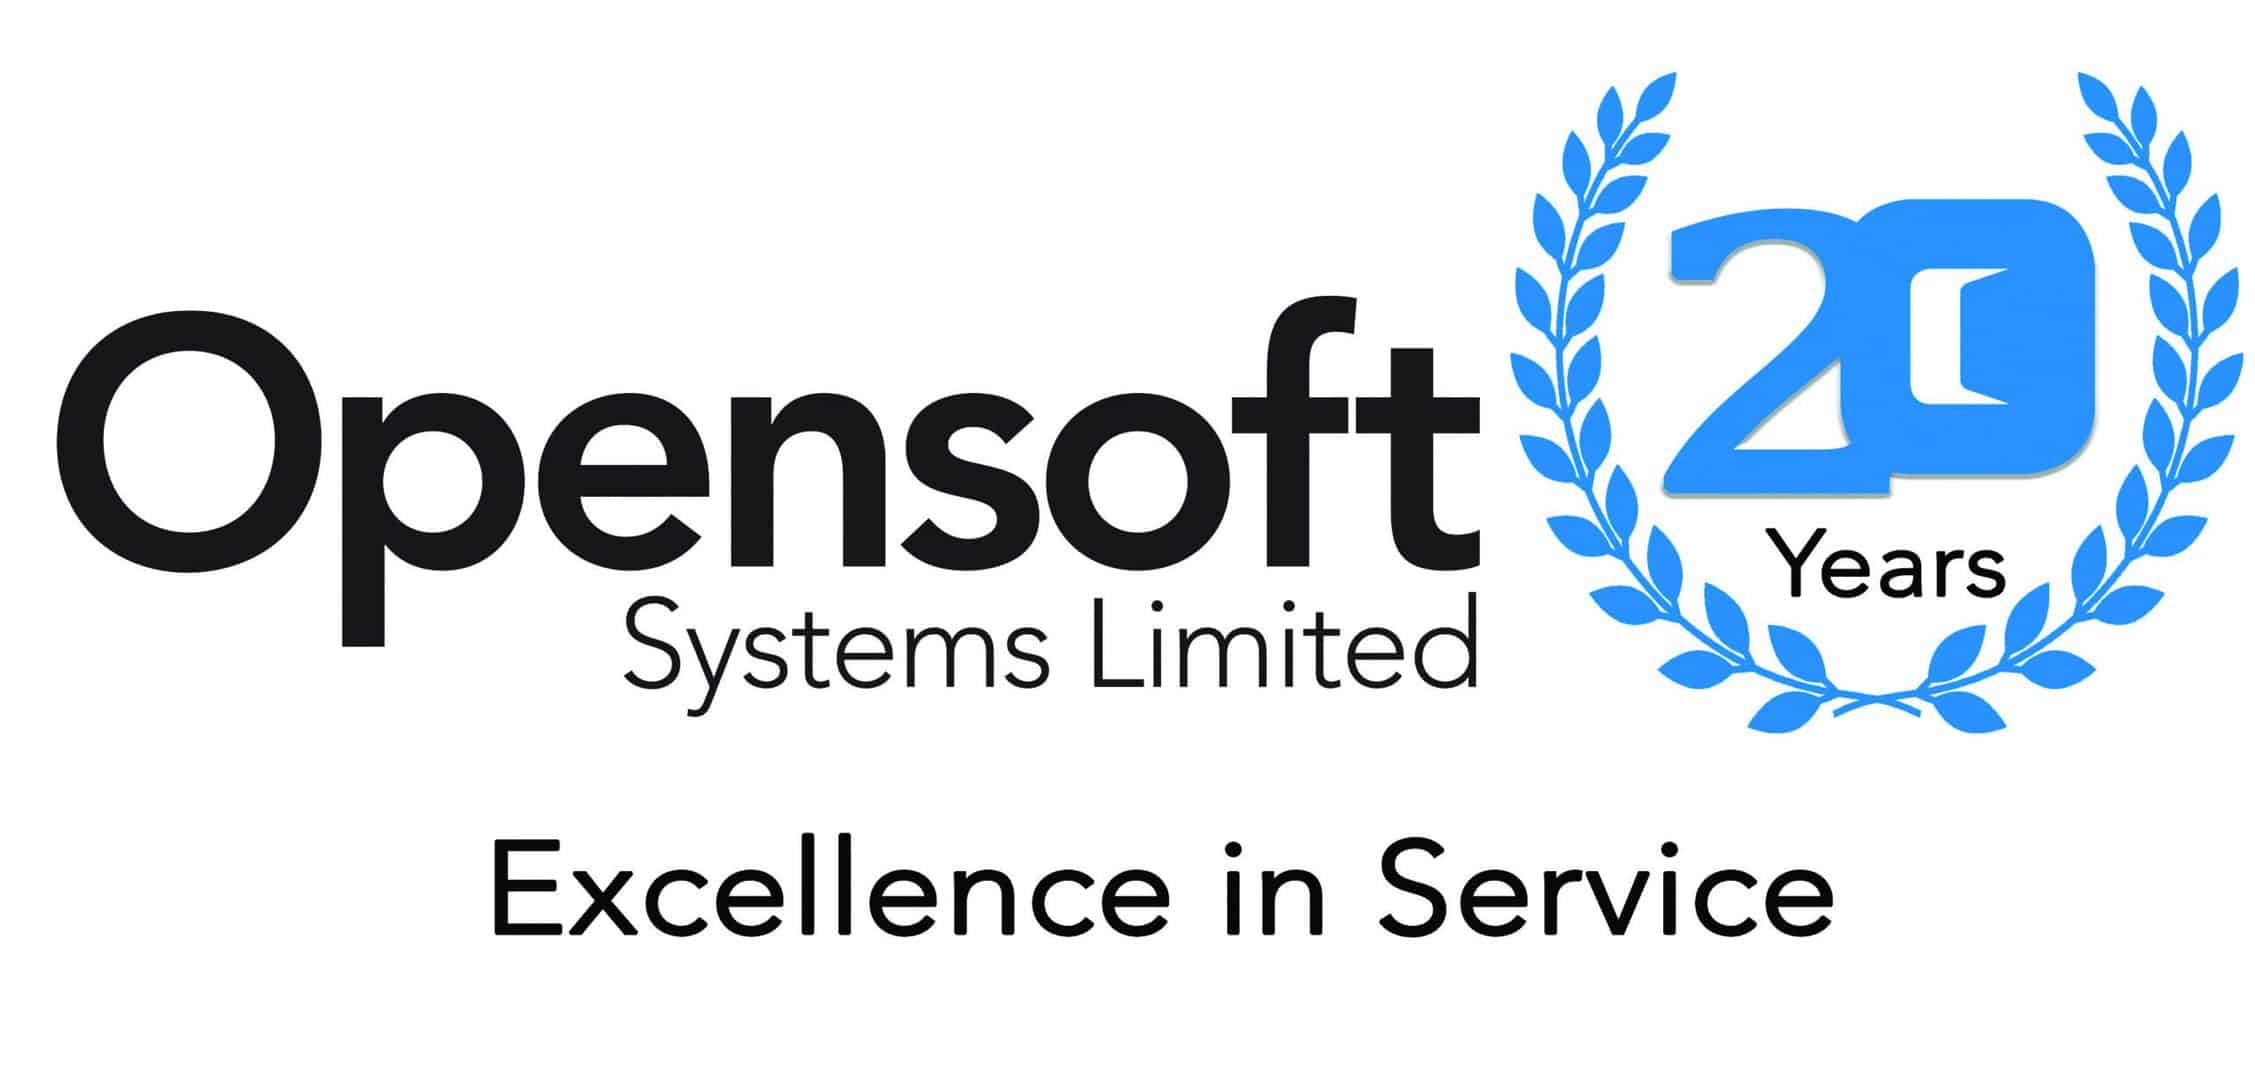 Opensoft Systems Ltd